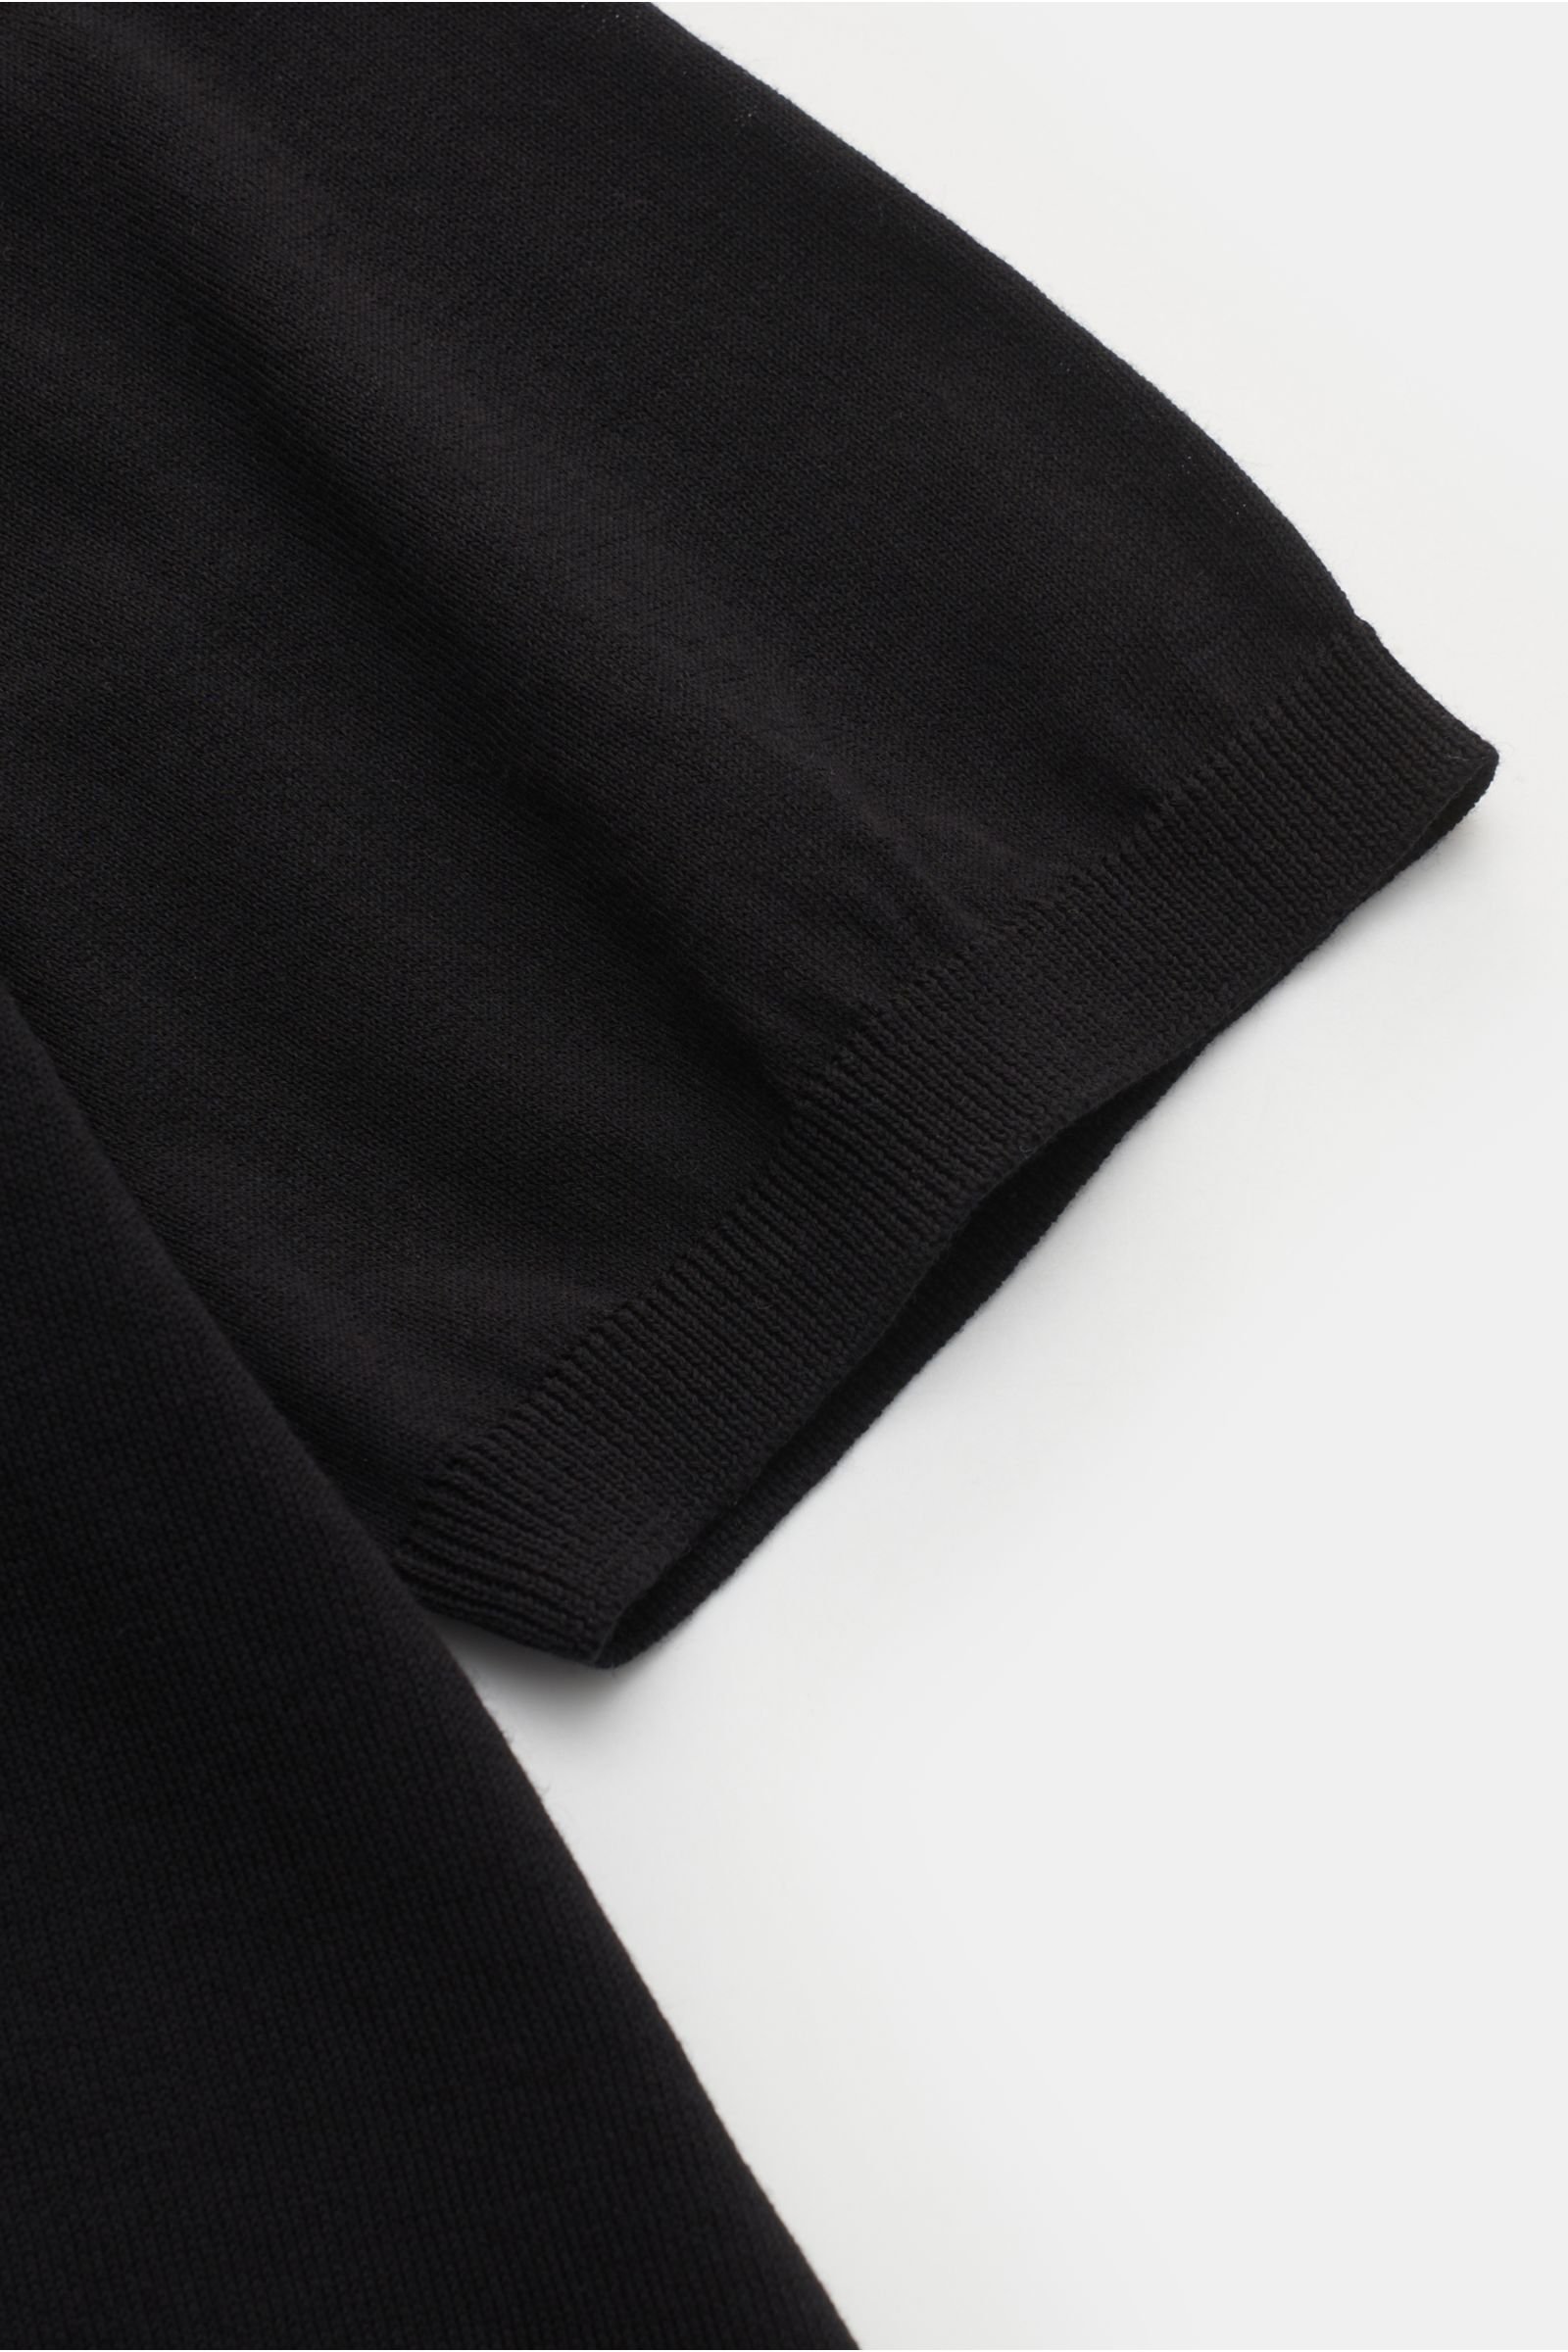 ROBERTO COLLINA short sleeve knit polo black | BRAUN Hamburg